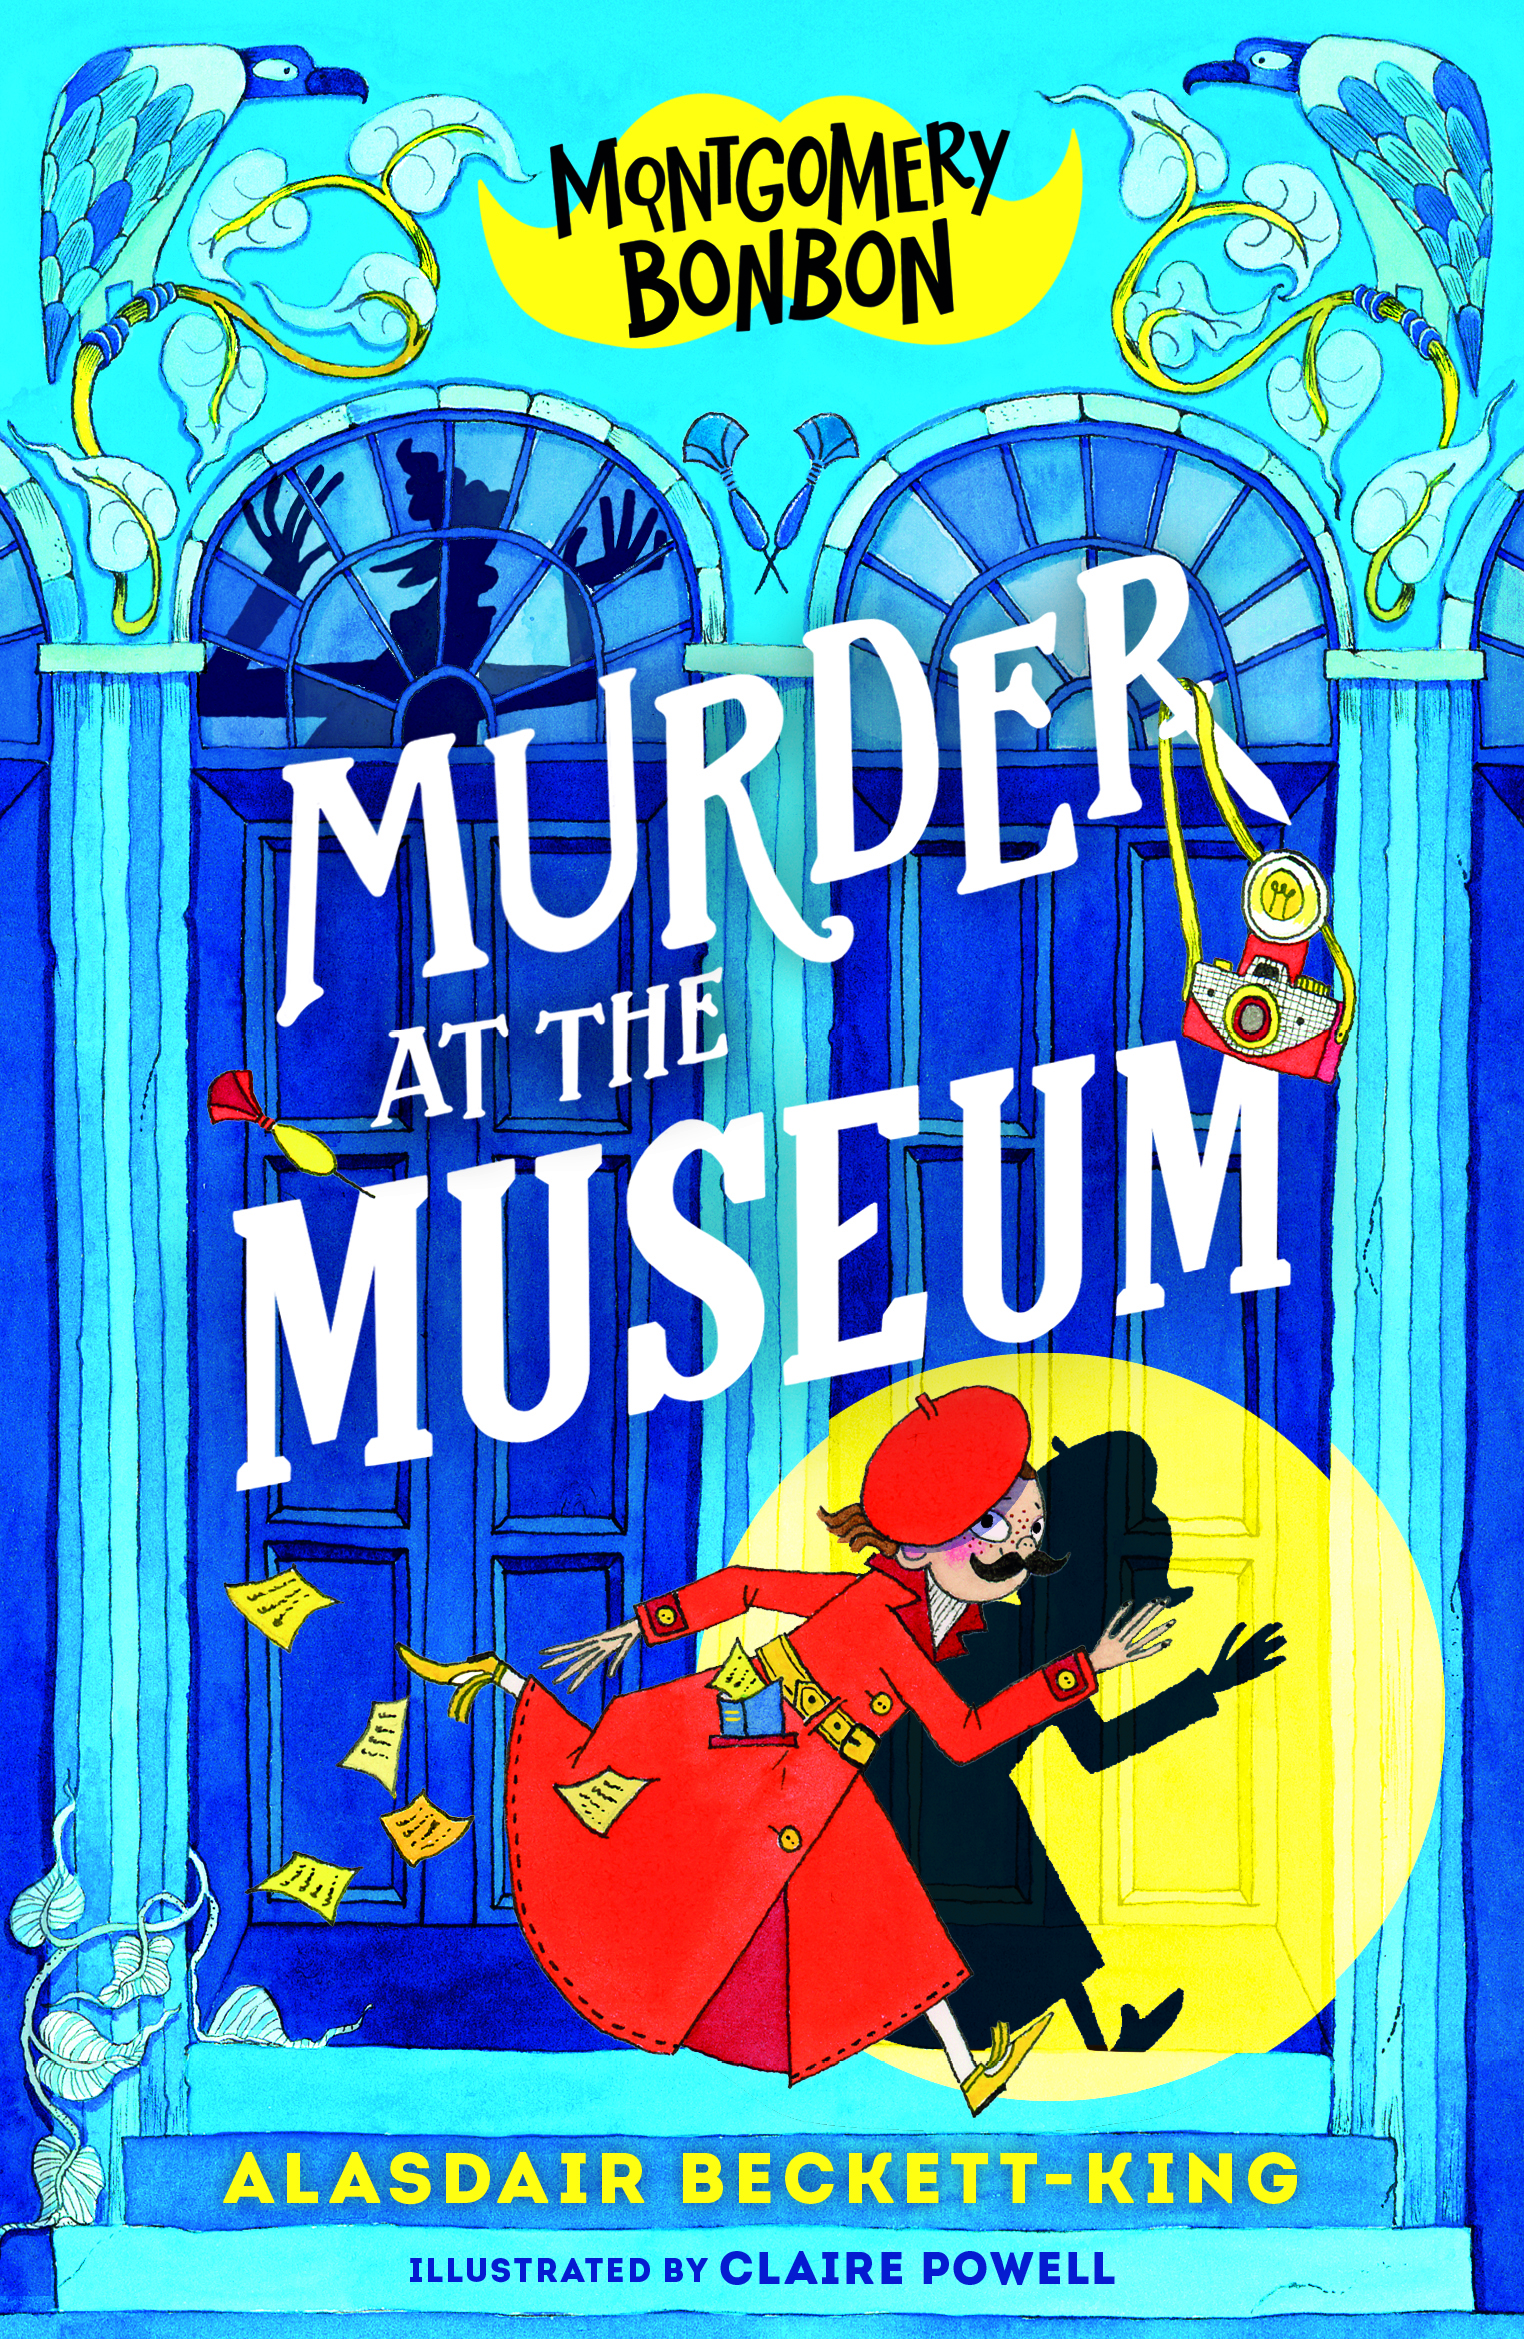 Montgomery-Bonbon-Murder-at-the-Museum